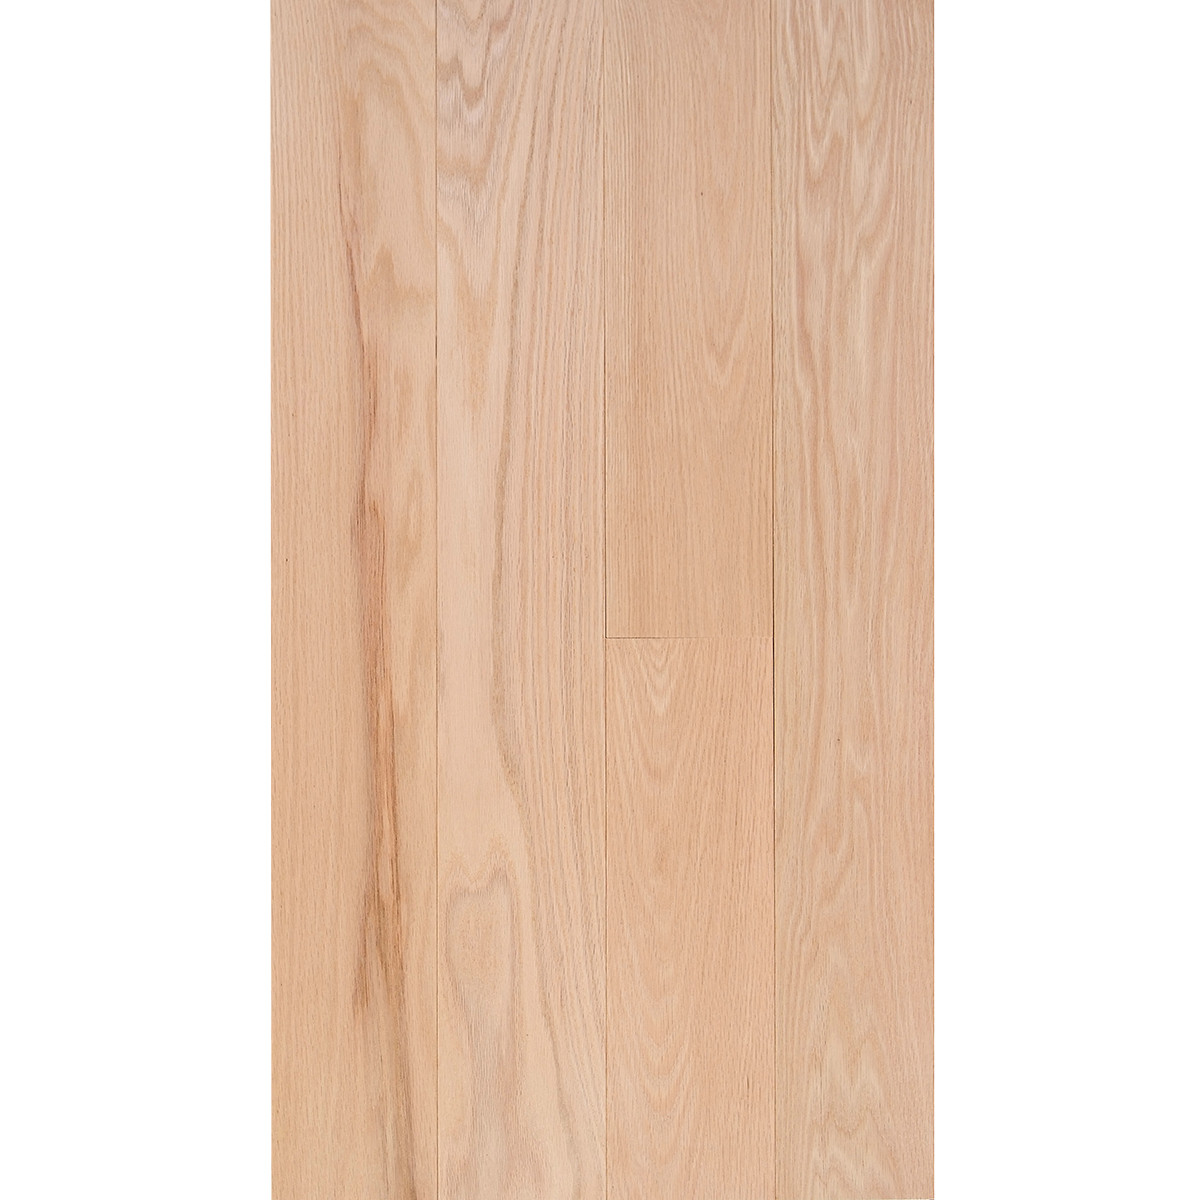 hardwood floor installer job description of red oak 3 4 x 5 select grade flooring regarding fs 5 redoak select em flooring